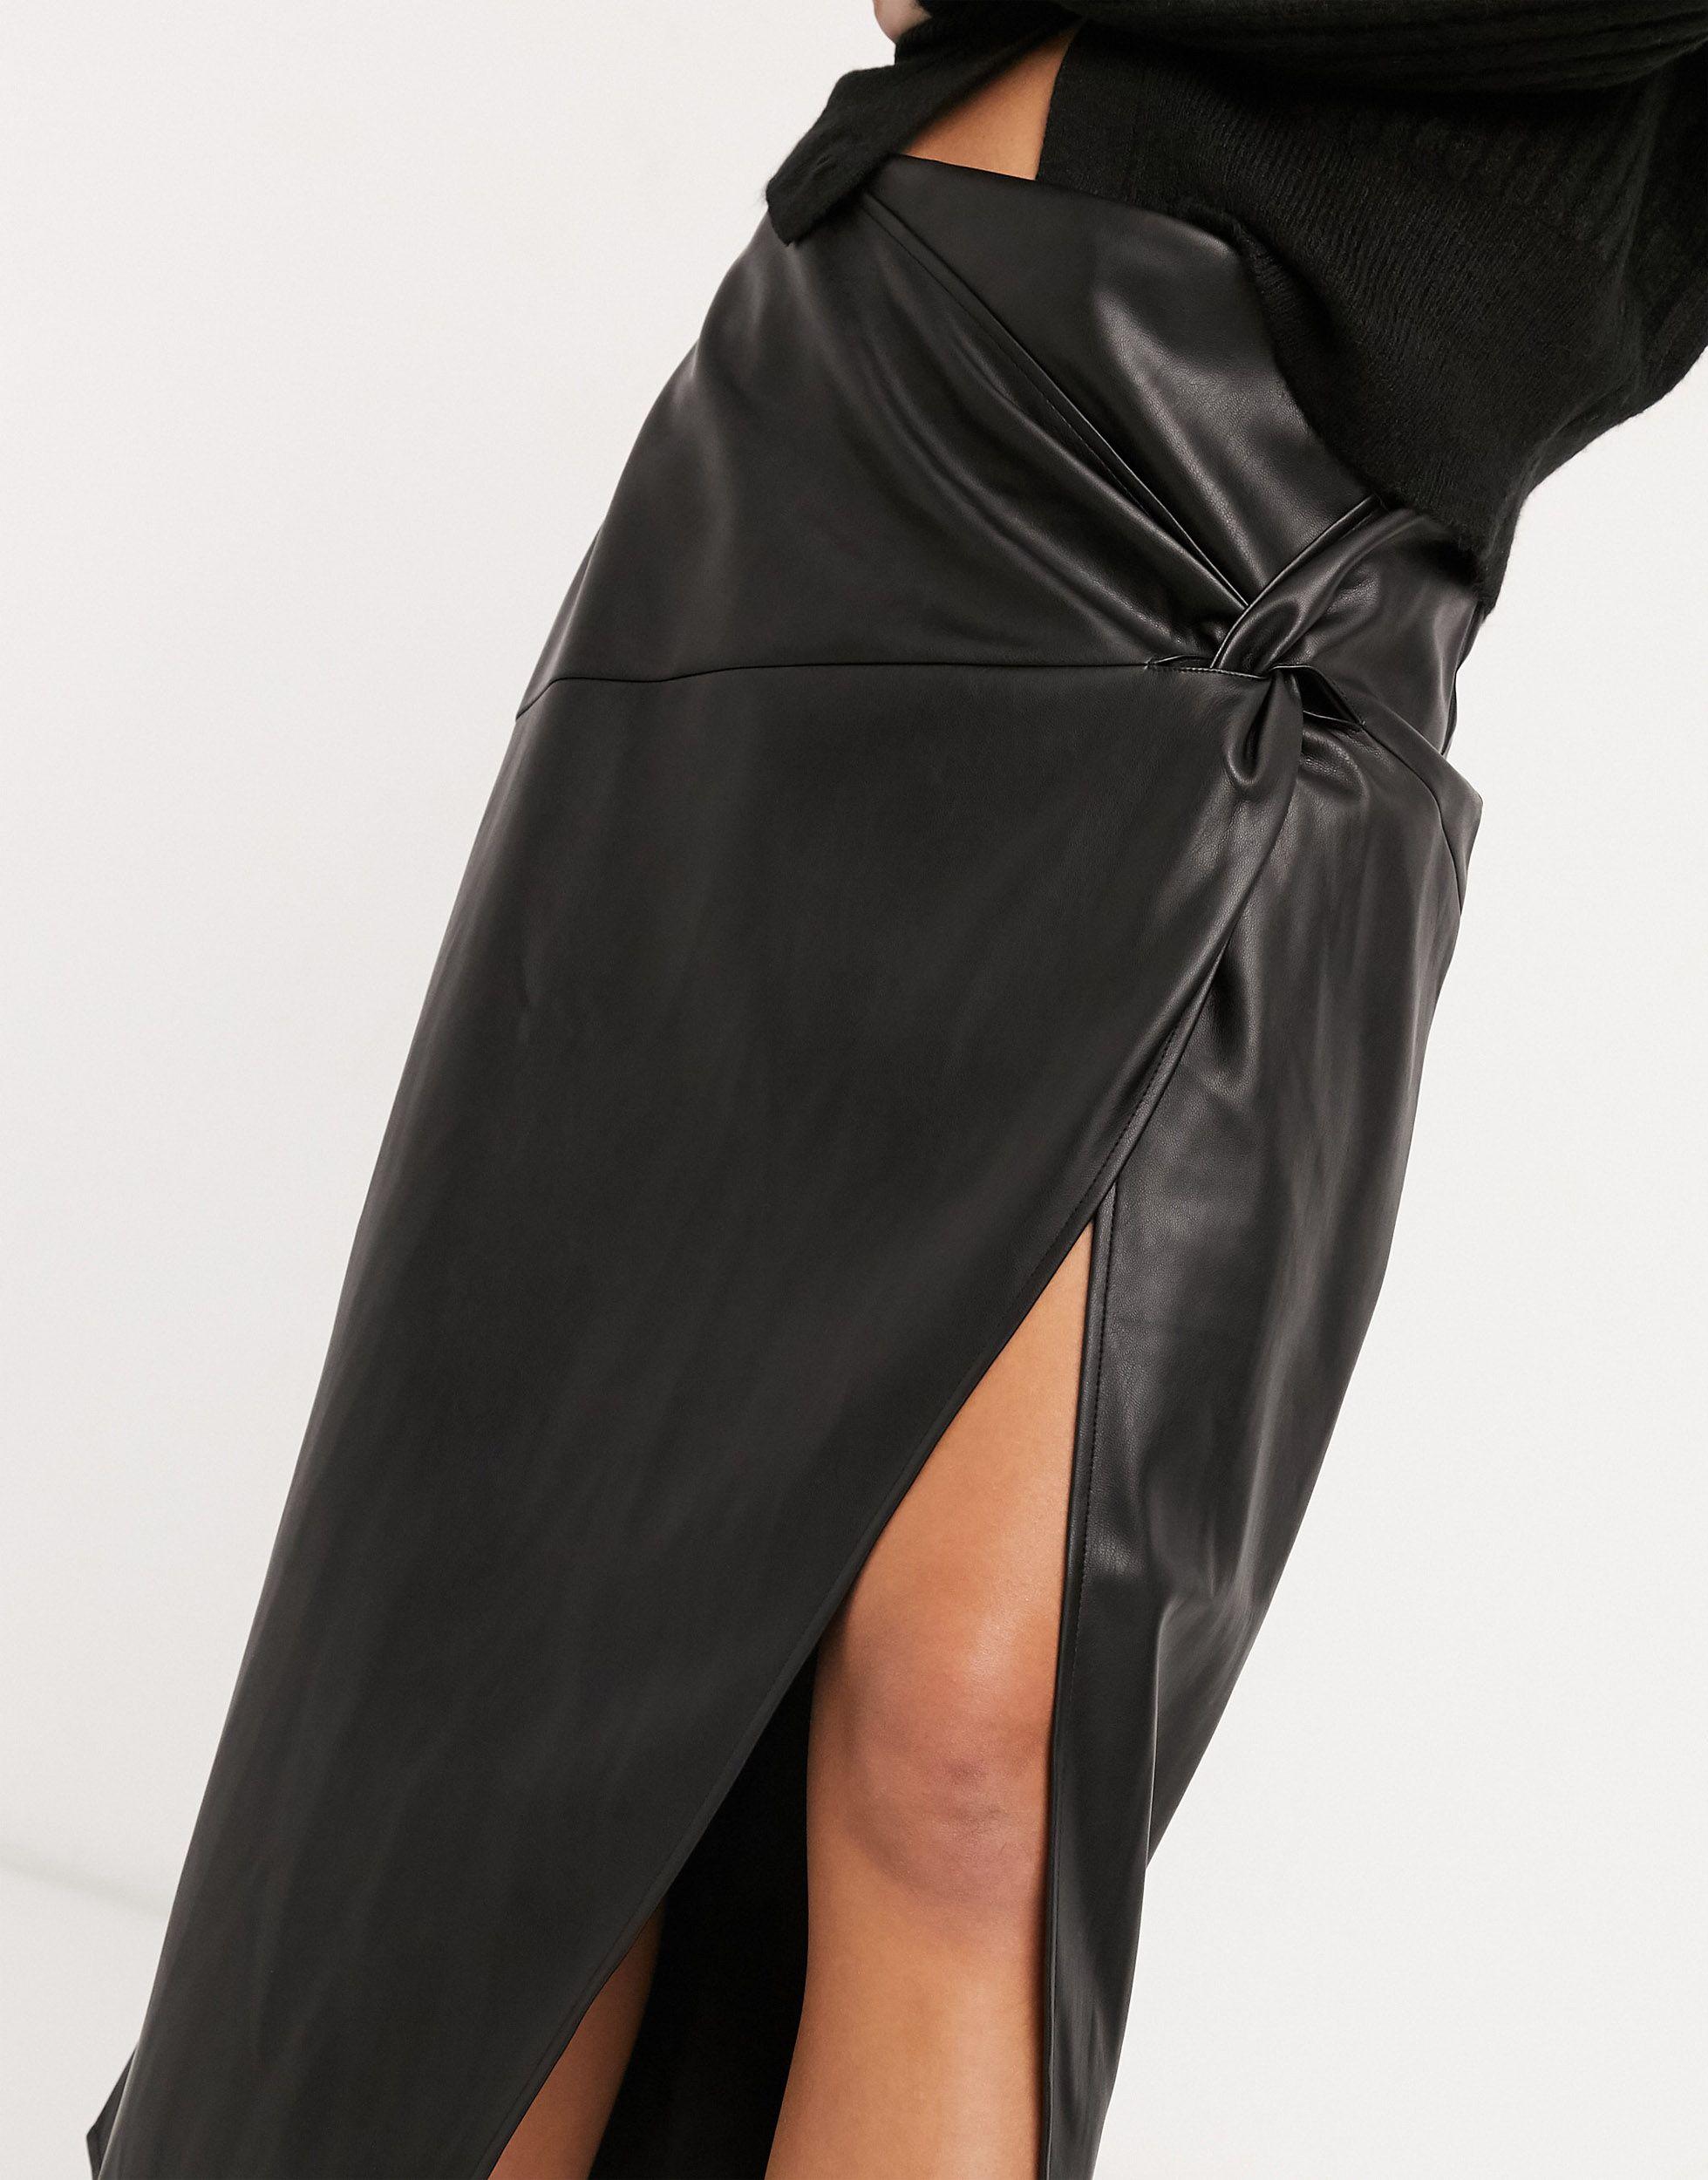 River Island Faux Leather Twist Wrap Midi Skirt in Black - Lyst